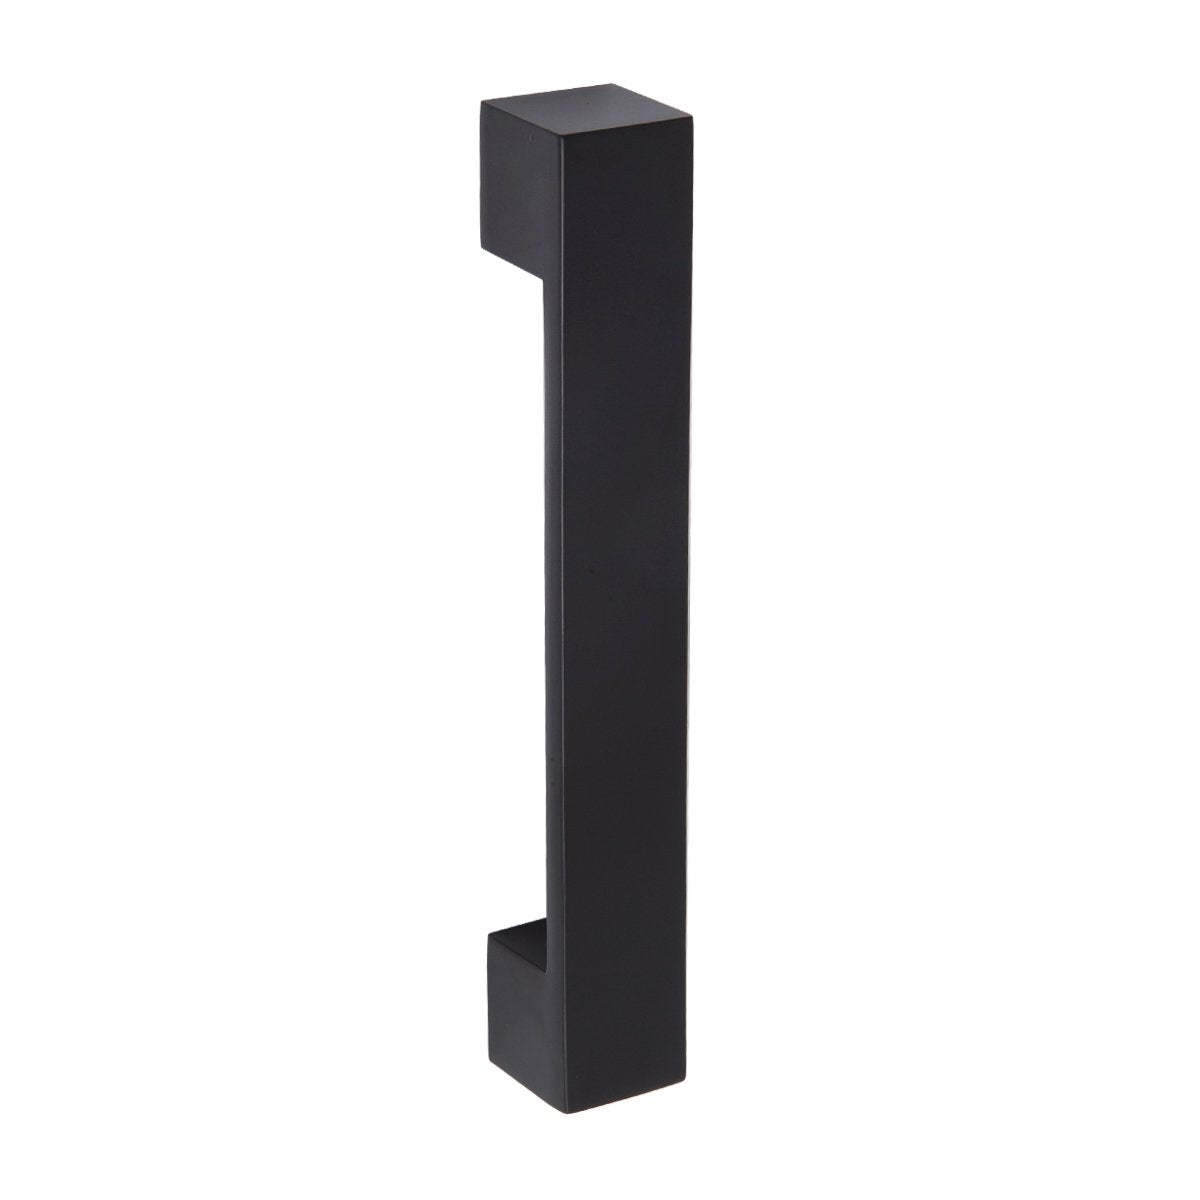 Amazon Basics Short Modern Cabinet Pull Handle, 6.38-inch Length (5-inch Hole Center), Flat Black, 10-Pack - Like New